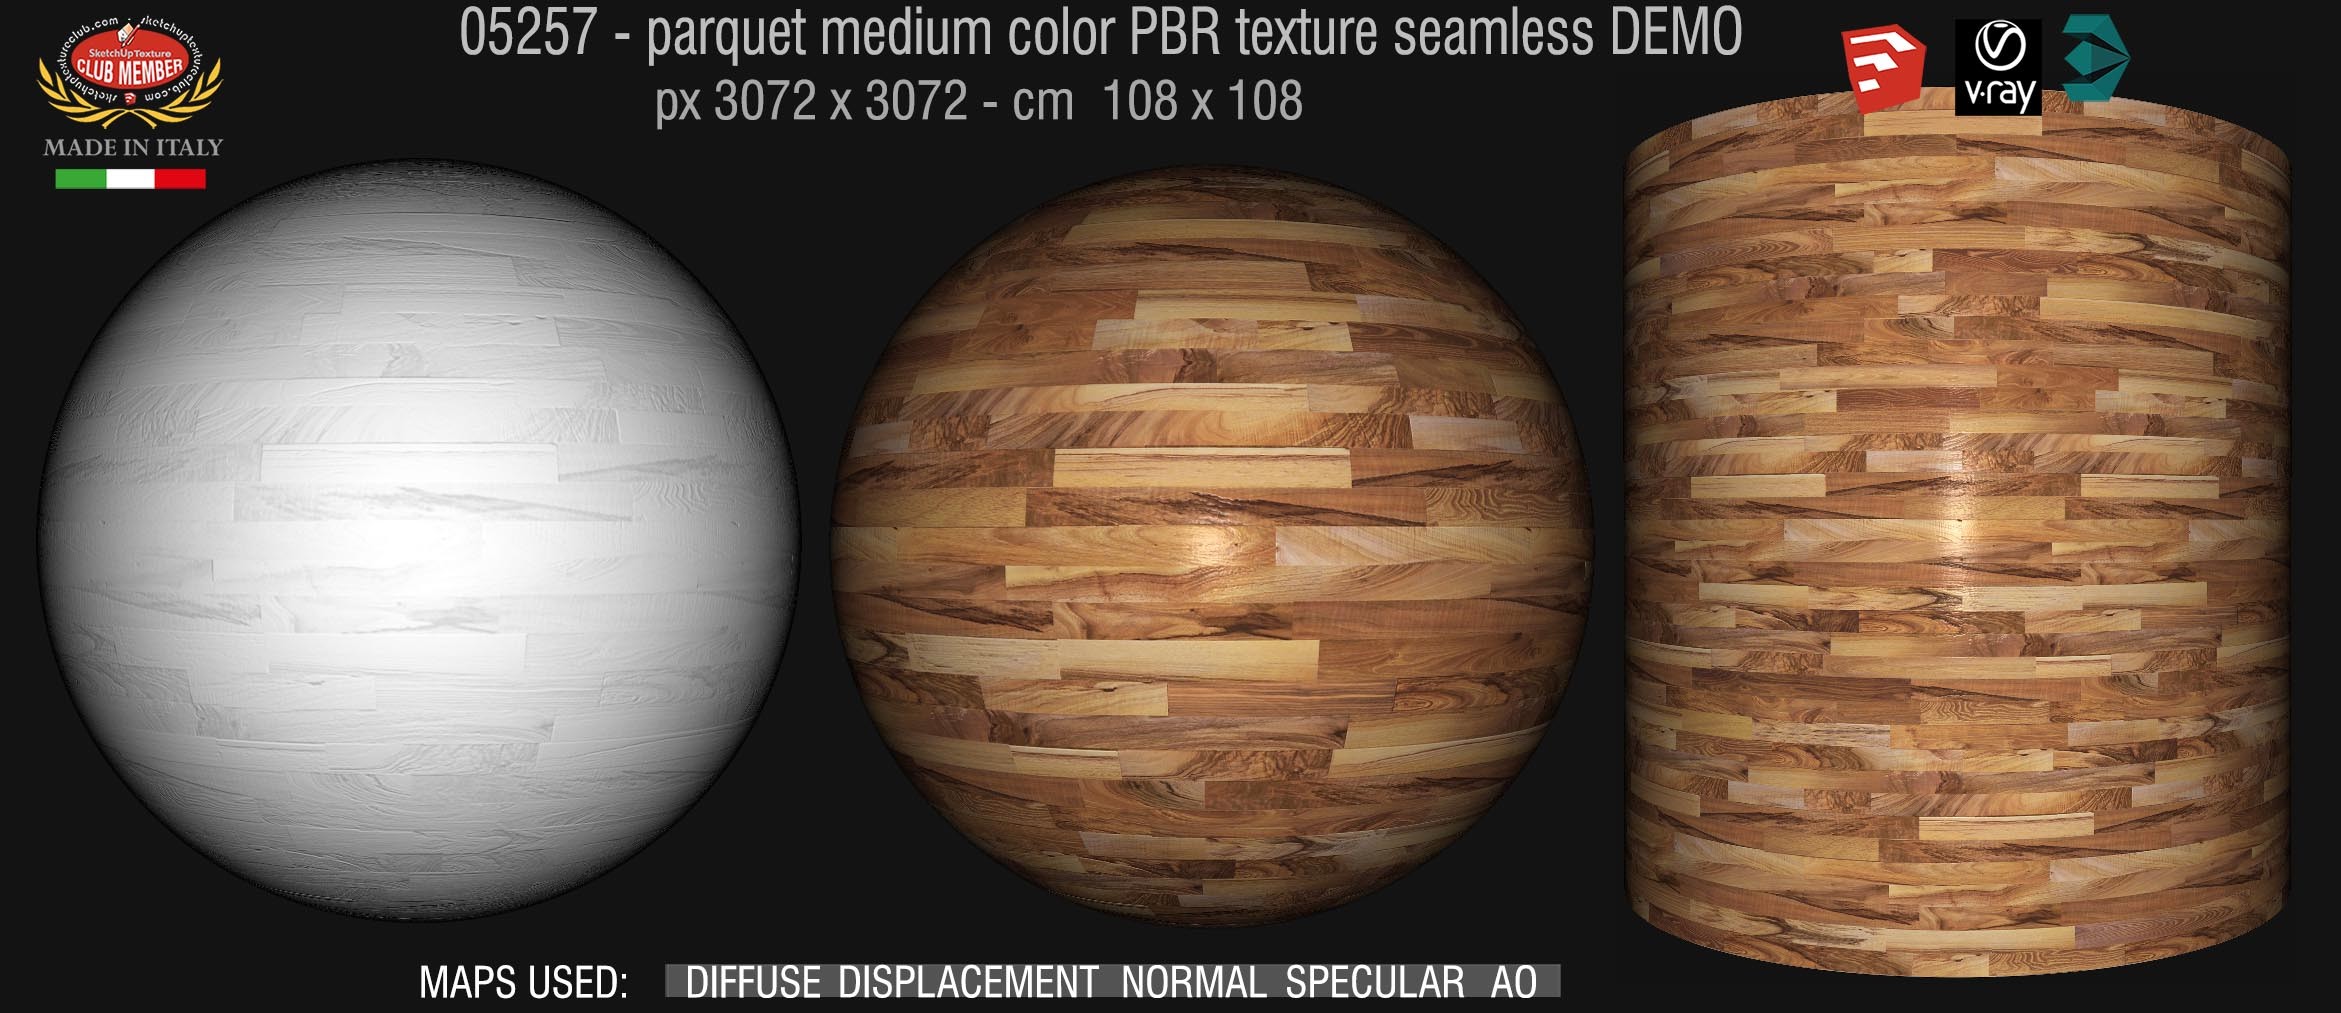 05257 parquet medium color PBR texture seamless DEMO